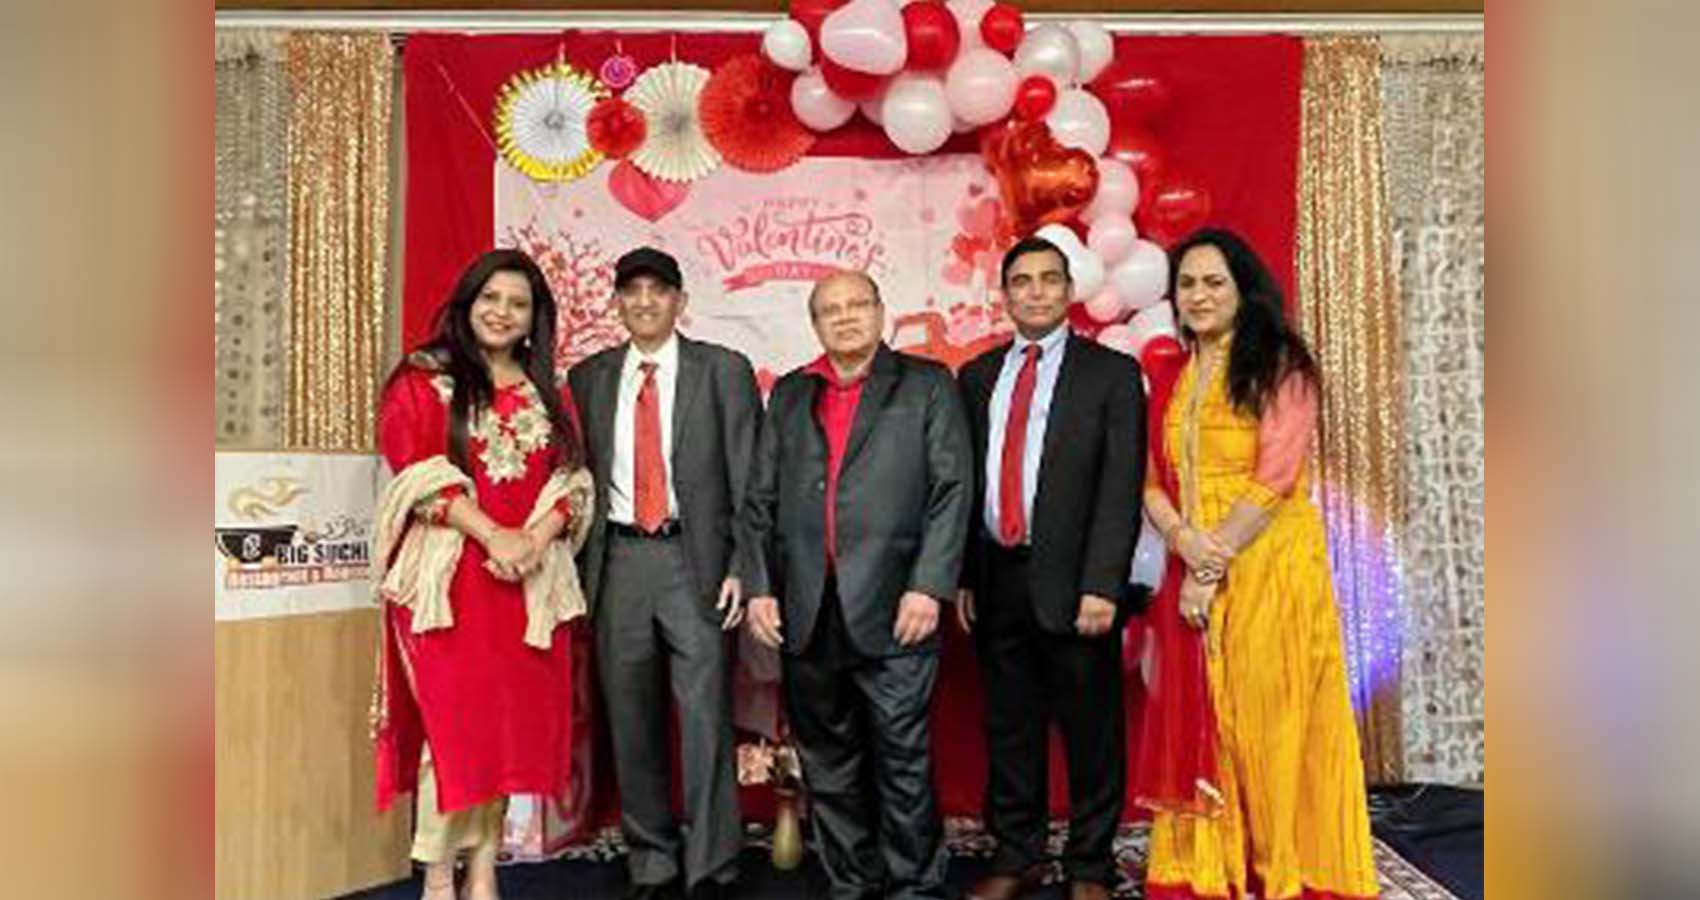 Senior Friendship Group Celebrates Valentine’s Day With Fun And Devotion